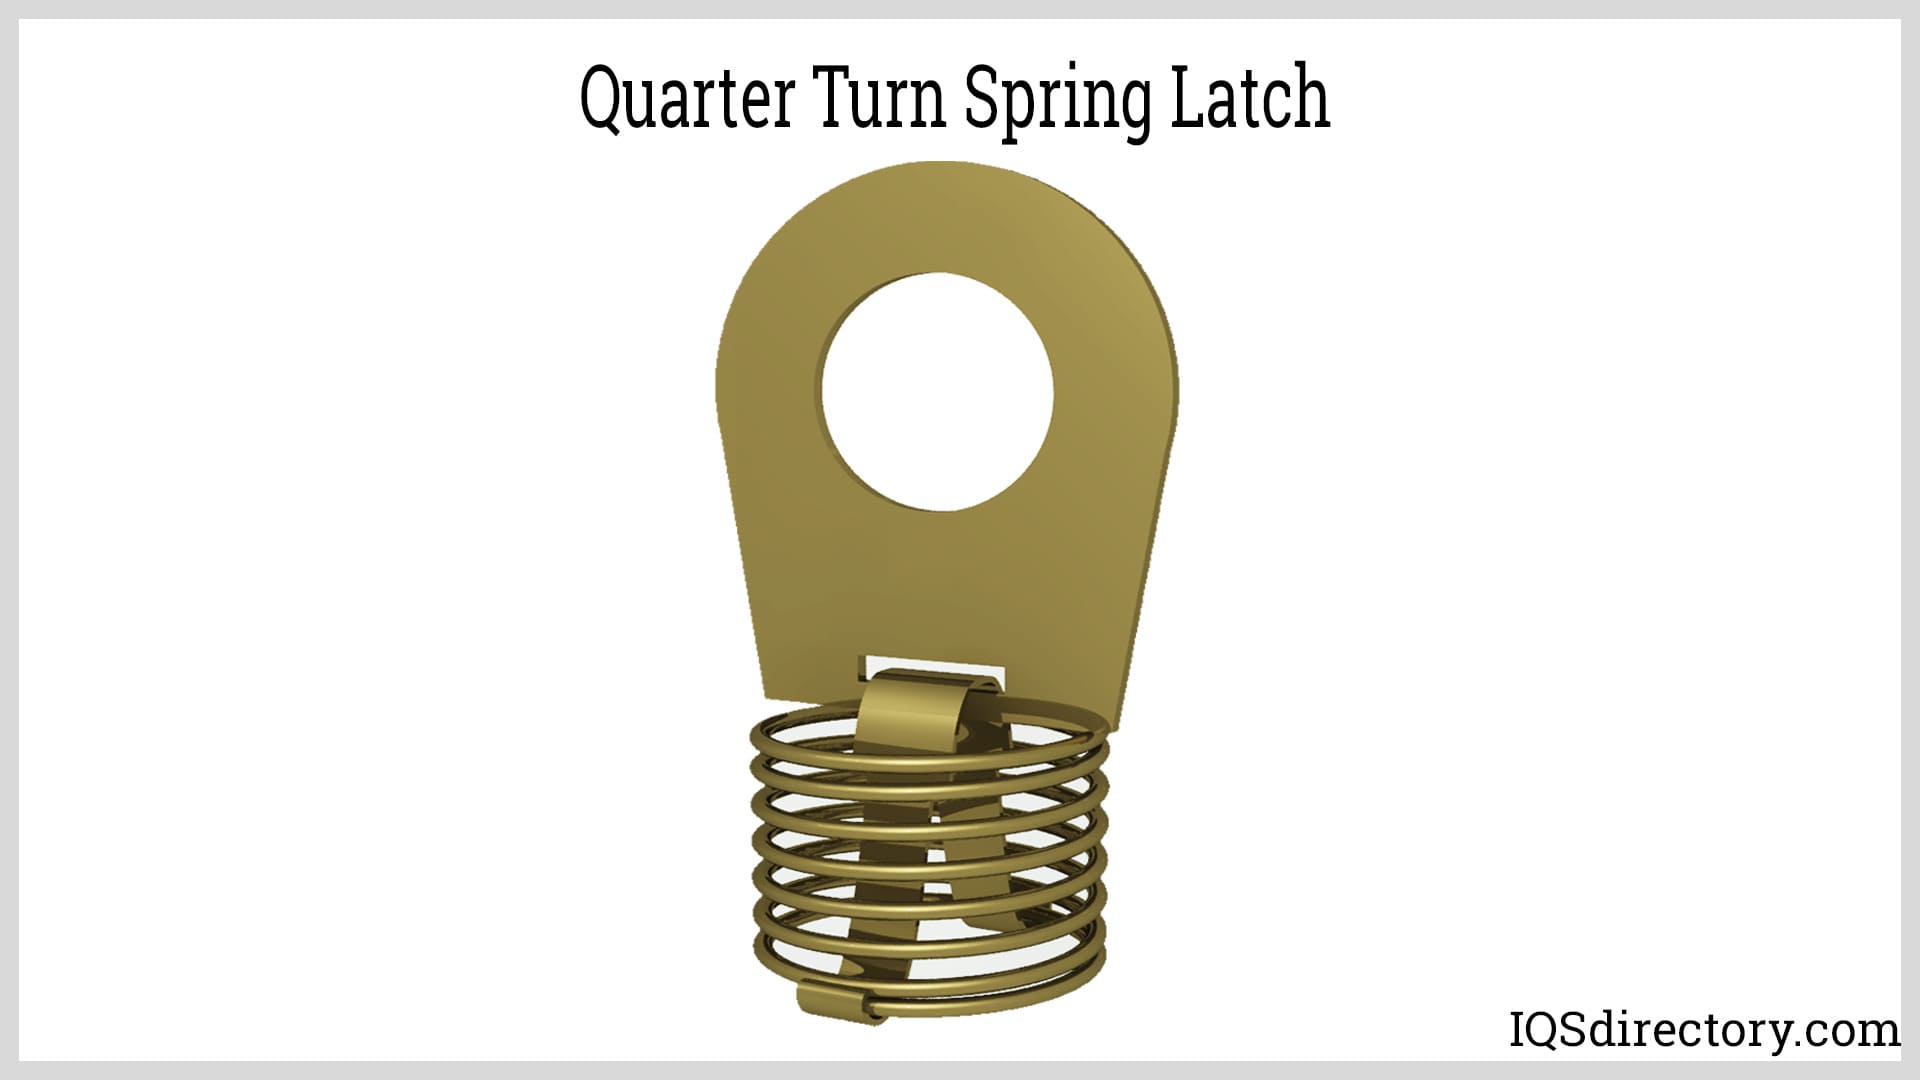 Quarter Turn Spring Latch